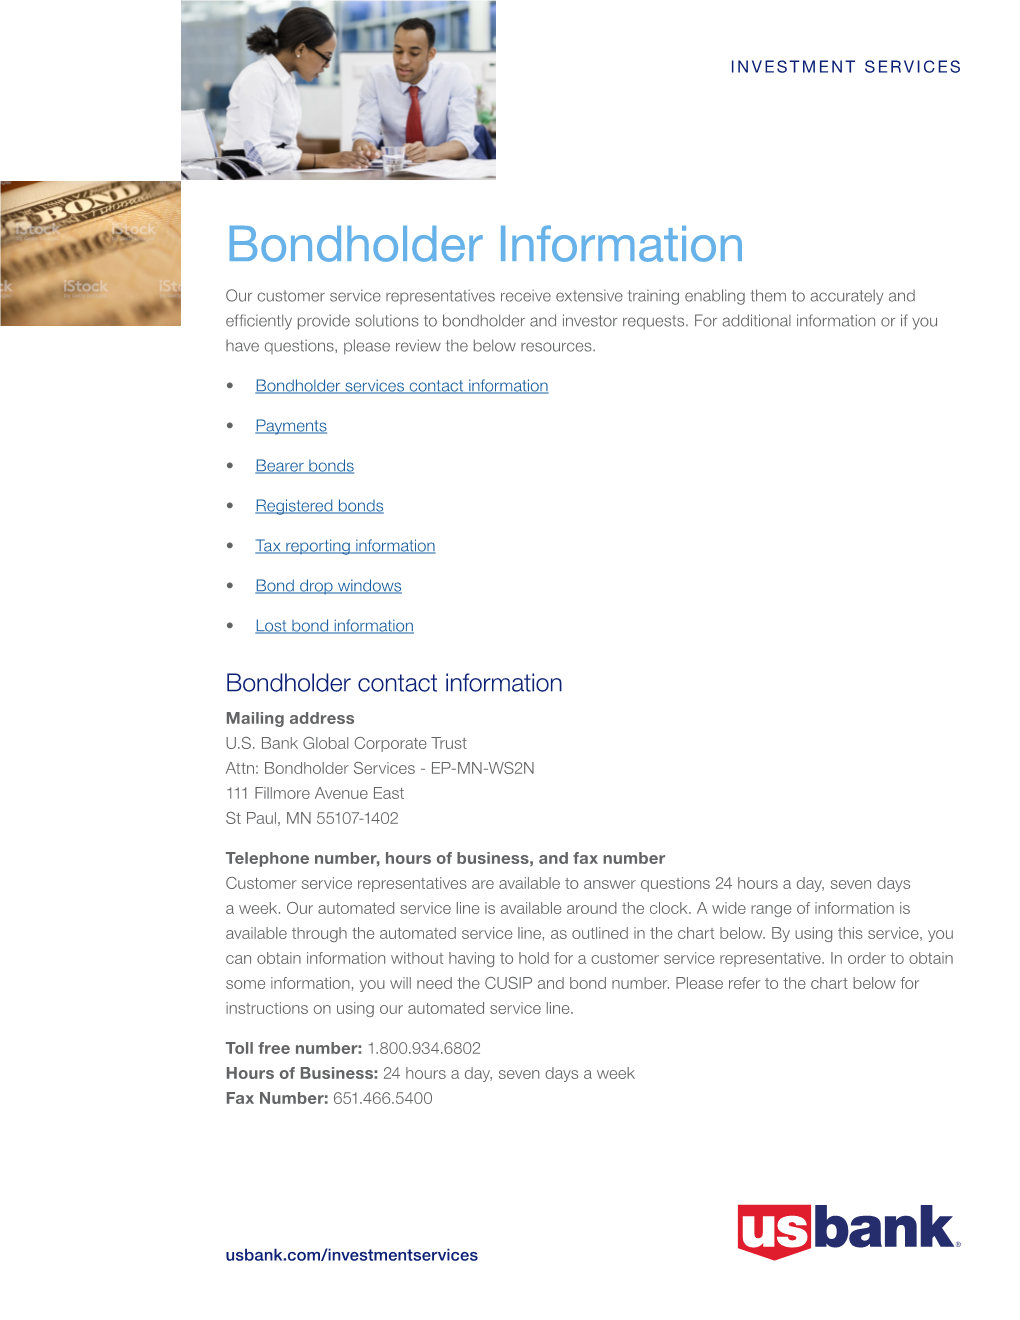 Bondholder Services Contact Information